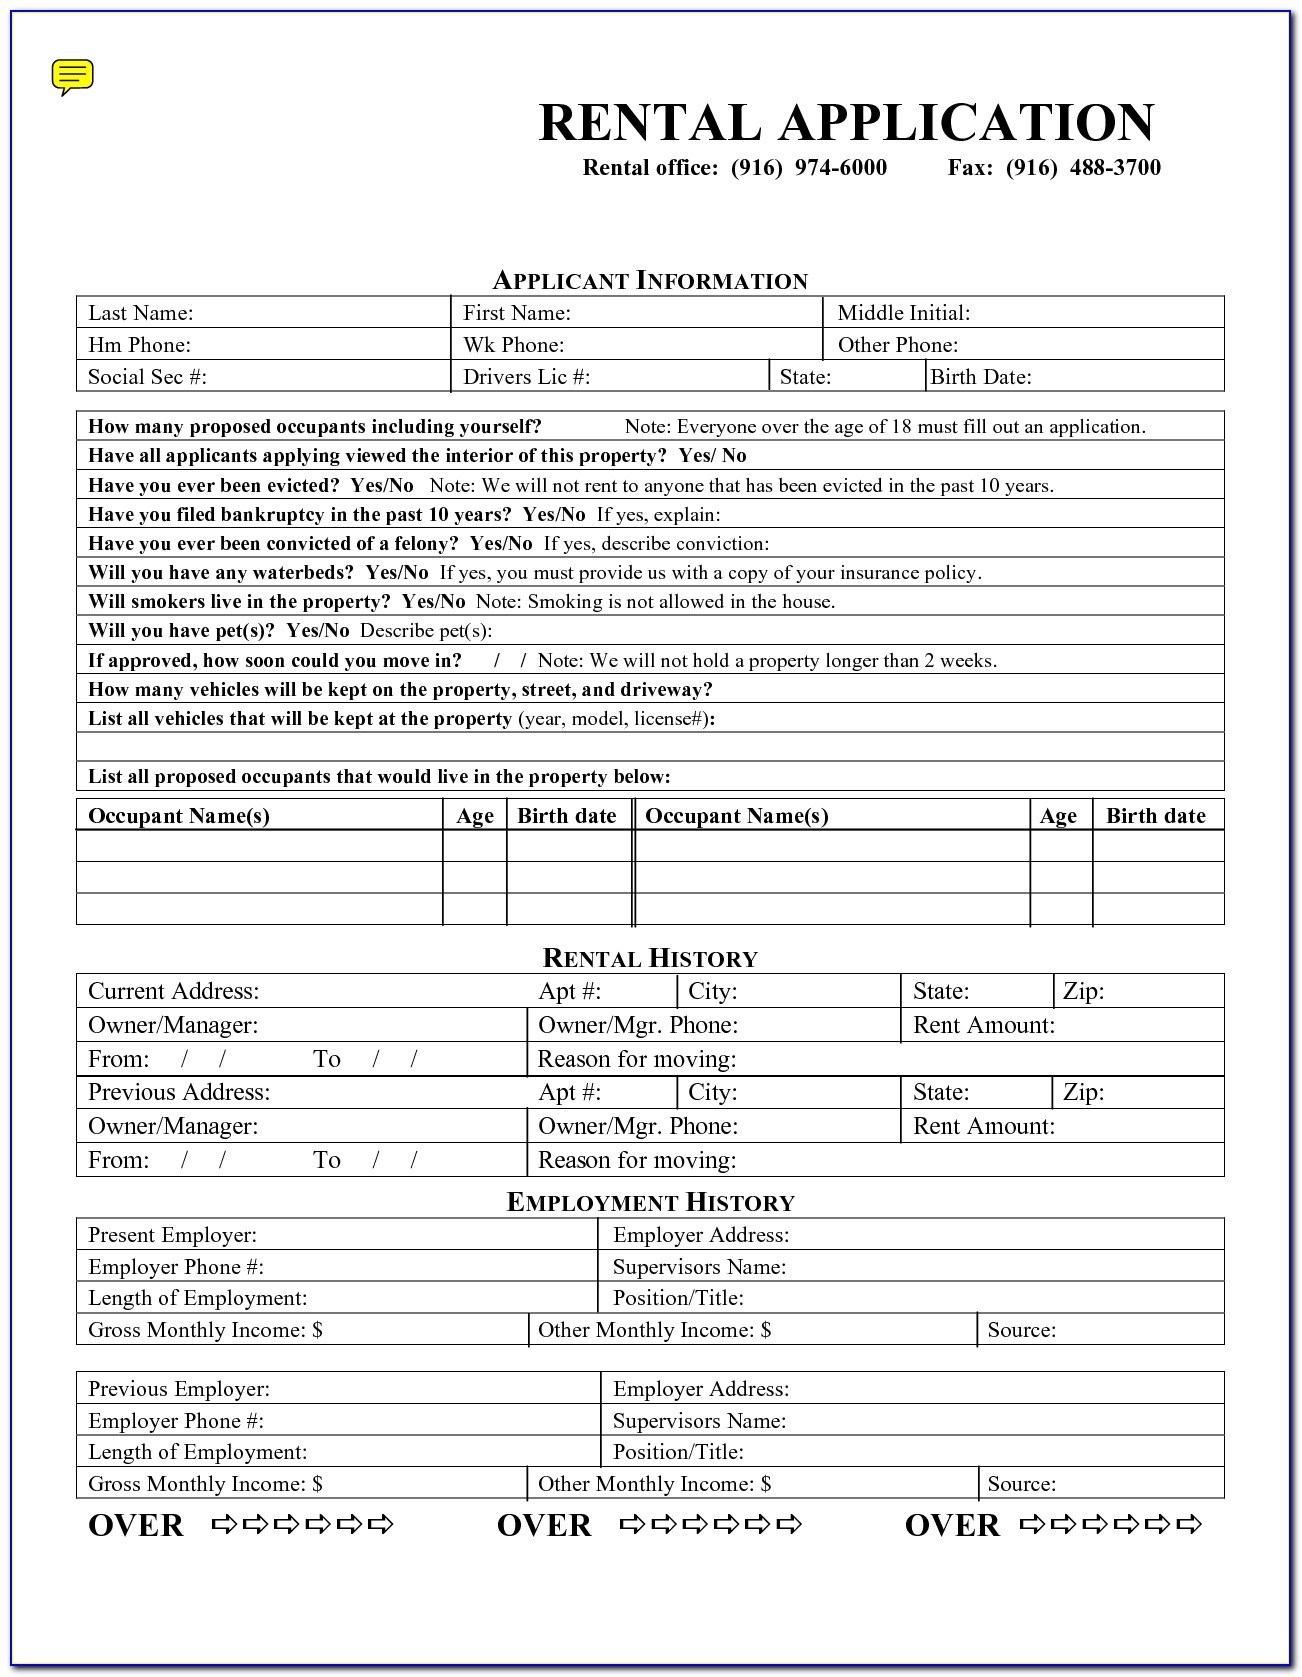 Rental Application Forms Free Printable - Form : Resume Examples - Free Printable Rental Application